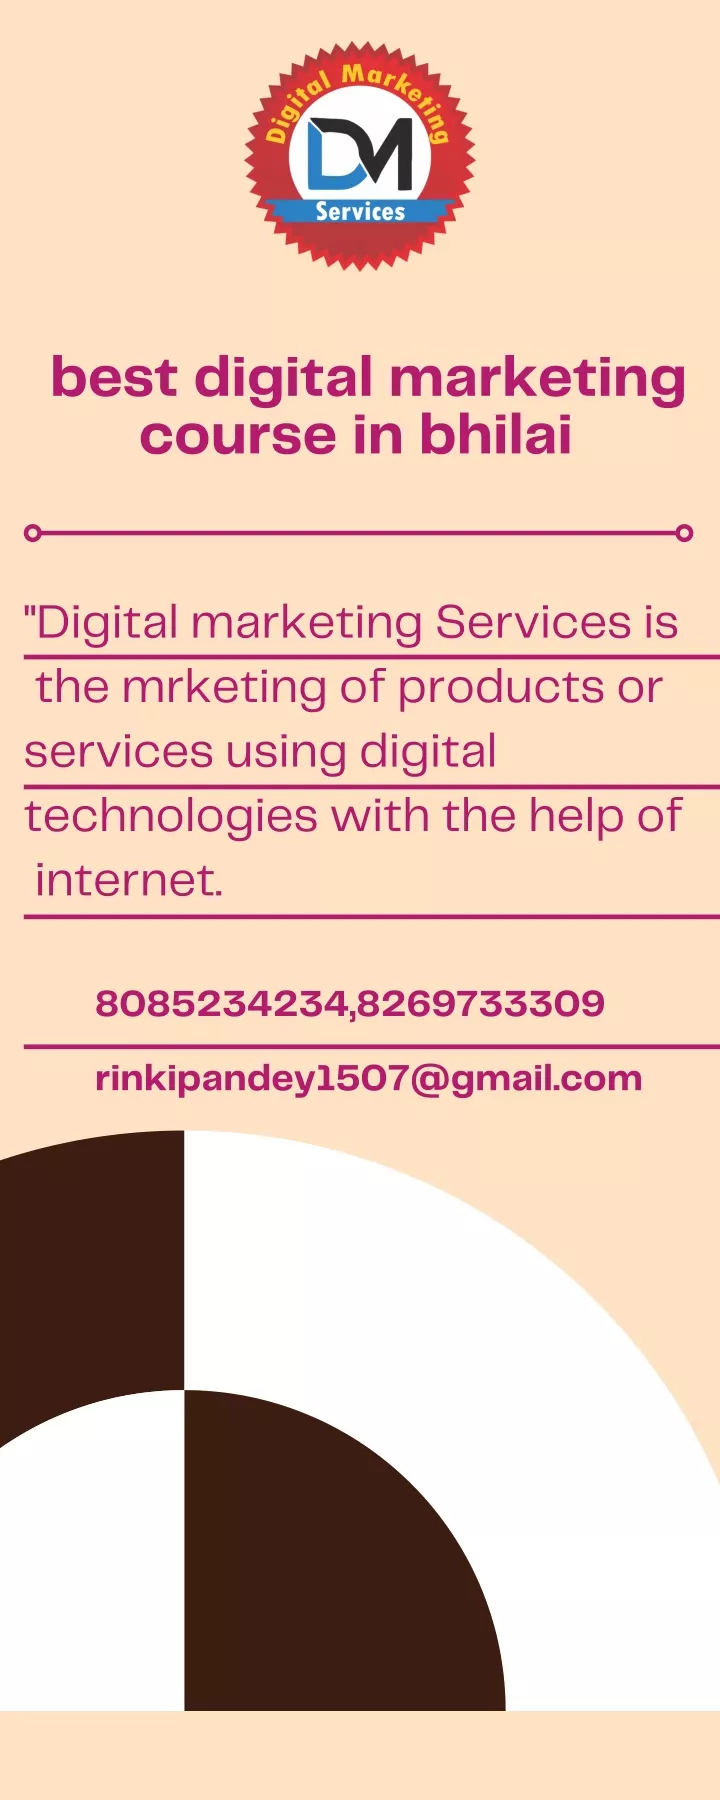 best digital marketing course in bhilai